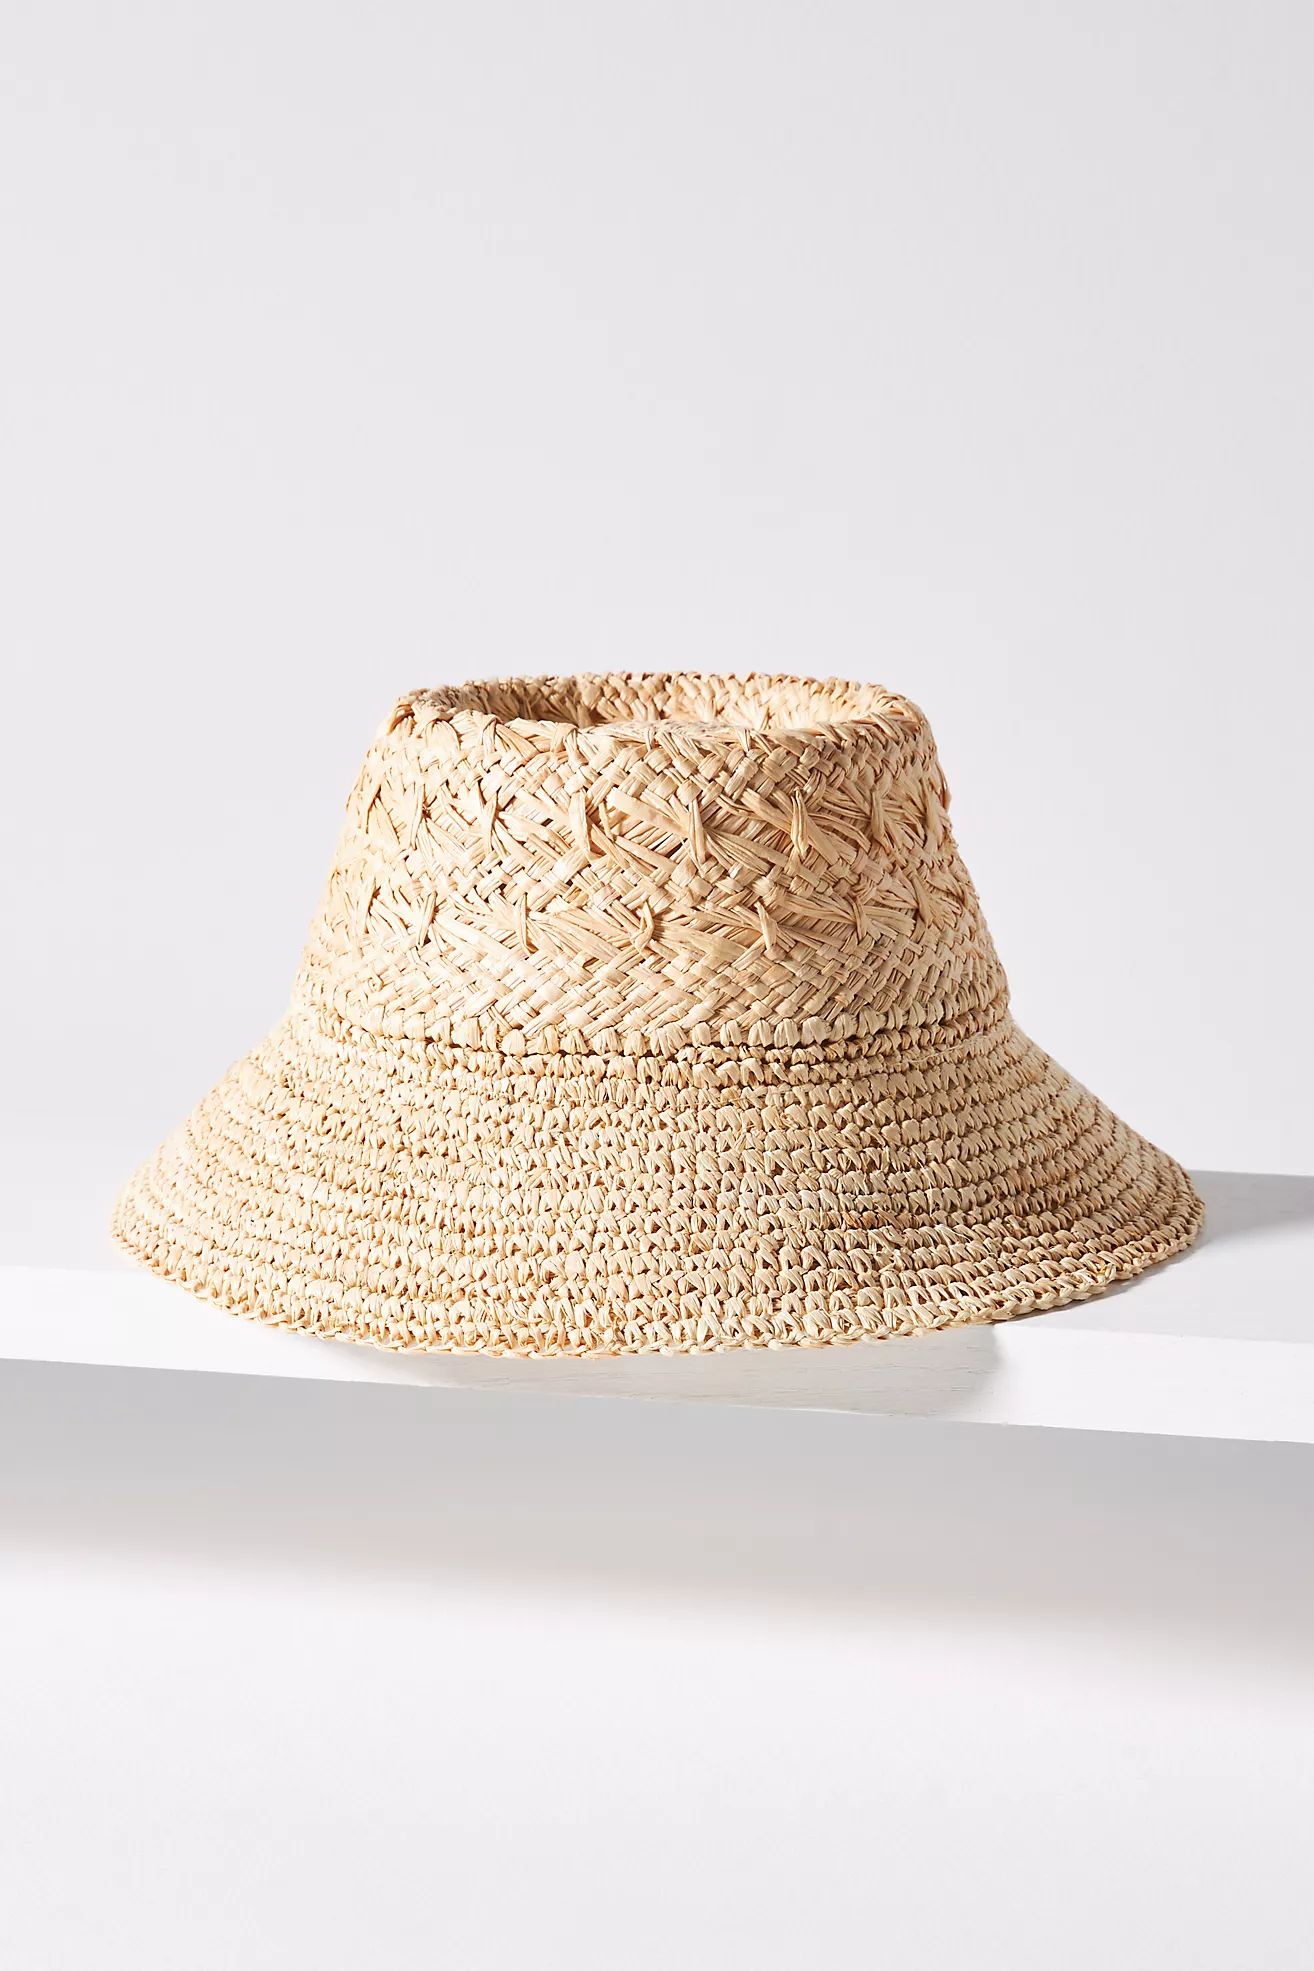 Wyeth Double-Weave Straw Bucket Hat | Anthropologie (US)